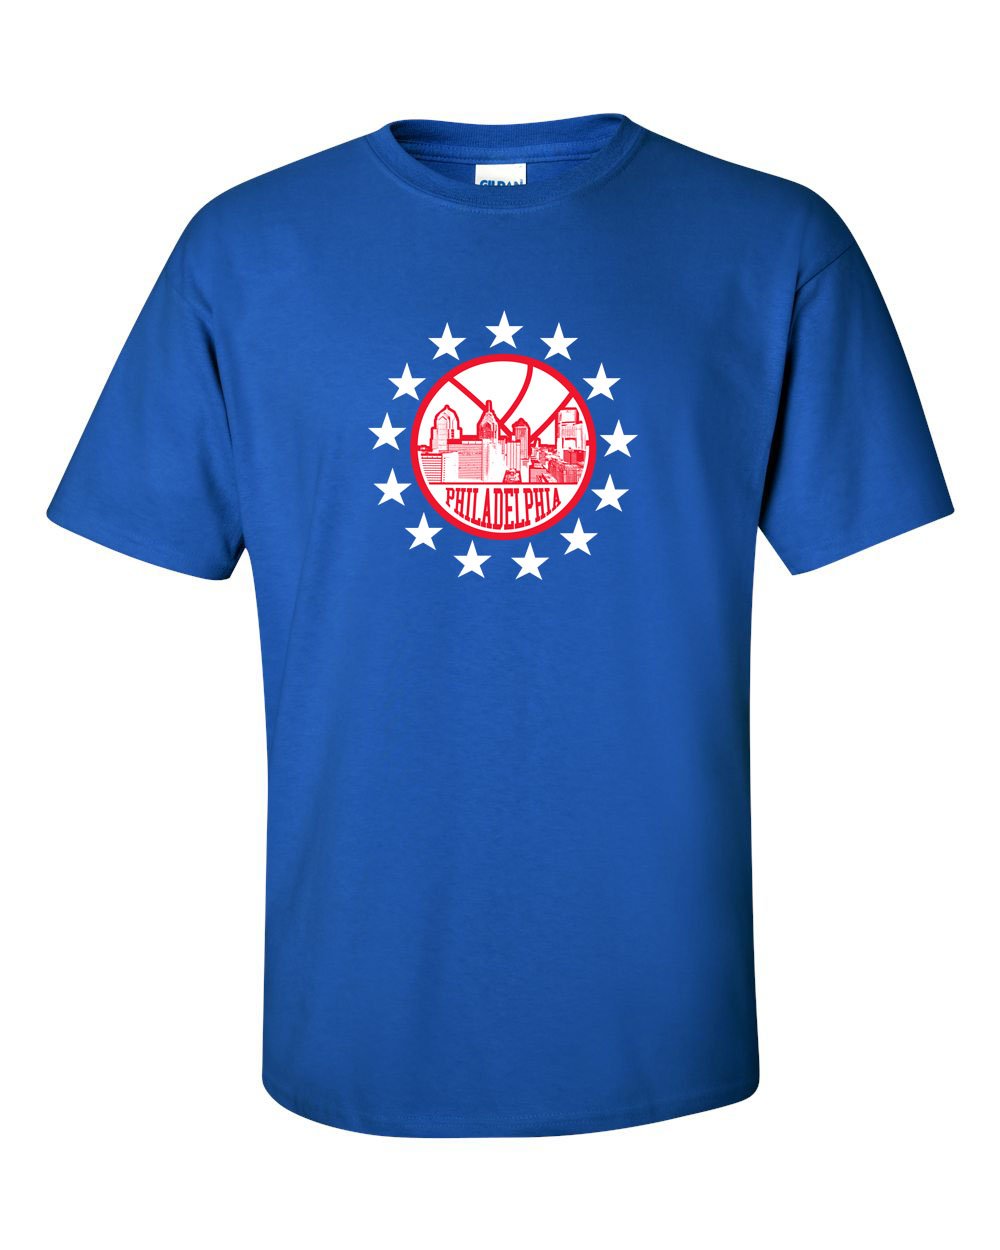 Philly B-Ball Mens/Unisex T-Shirt